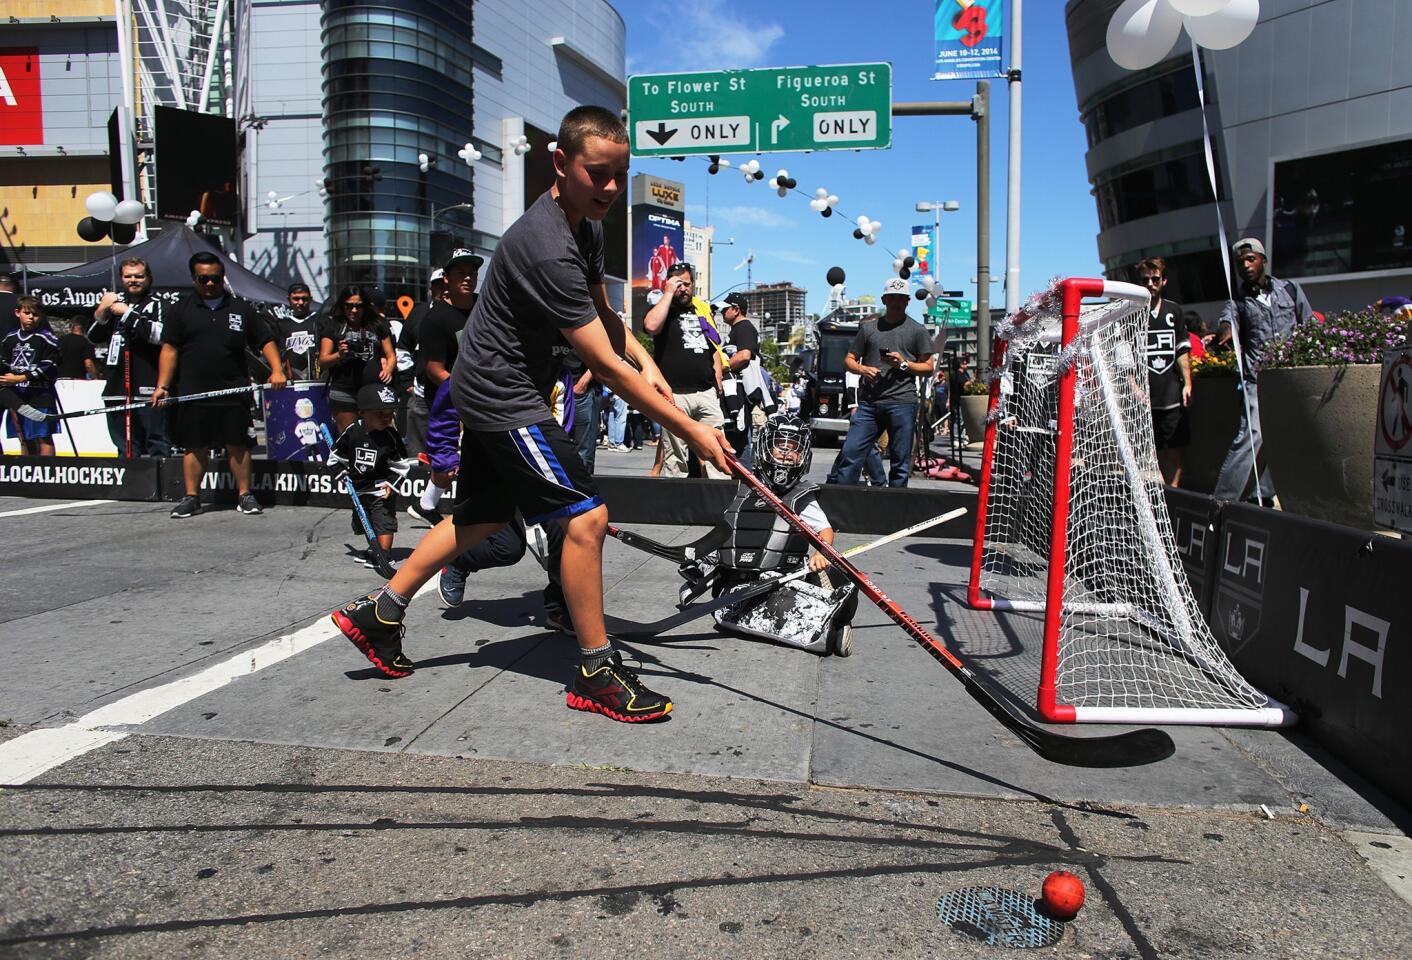 Fans play street hockey